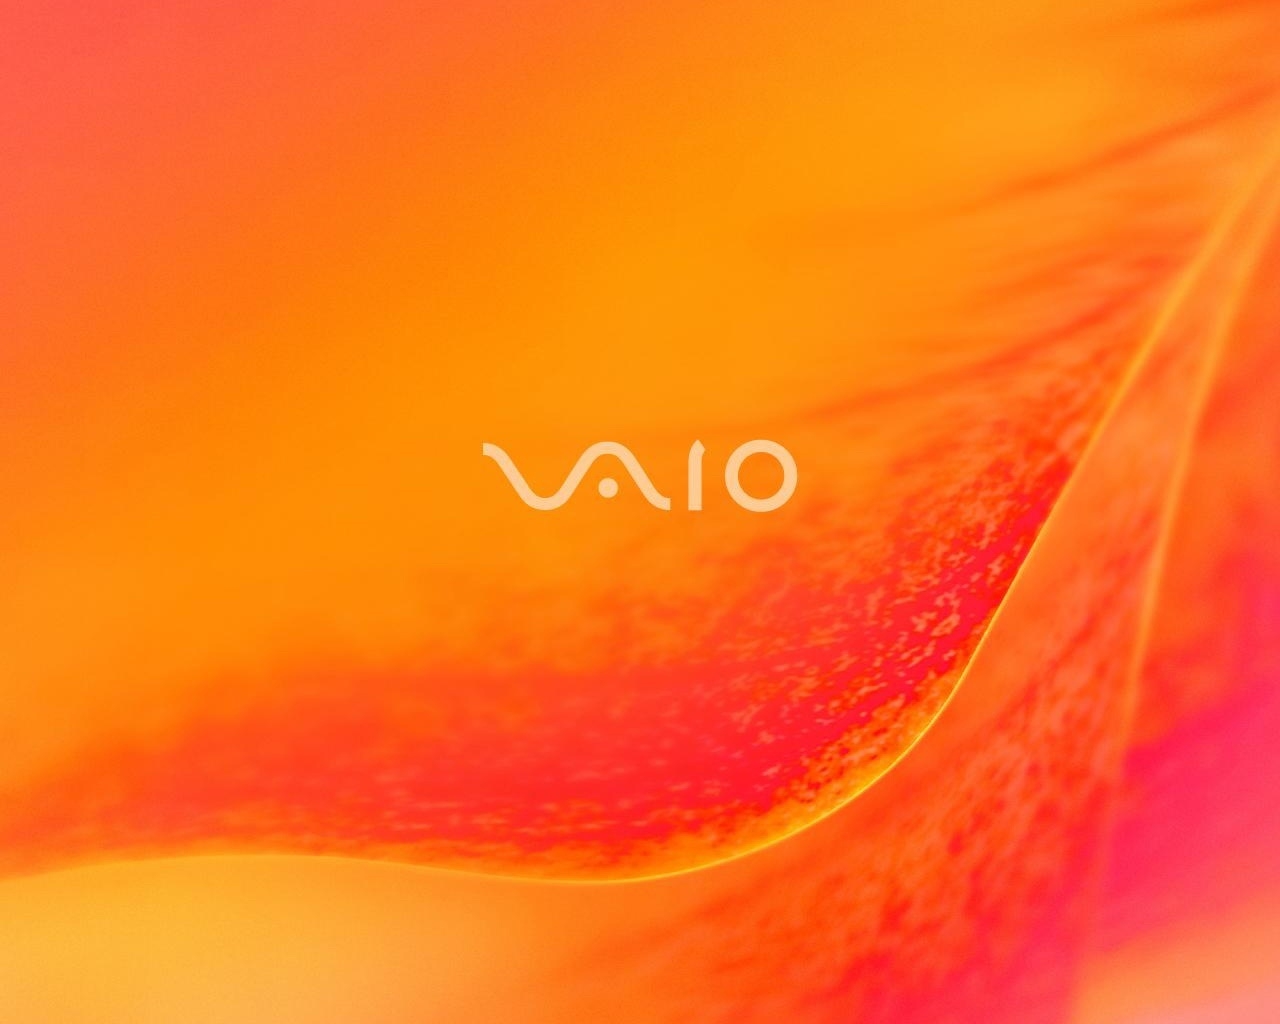 Sony Vaio Orange blossom for 1280 x 1024 resolution